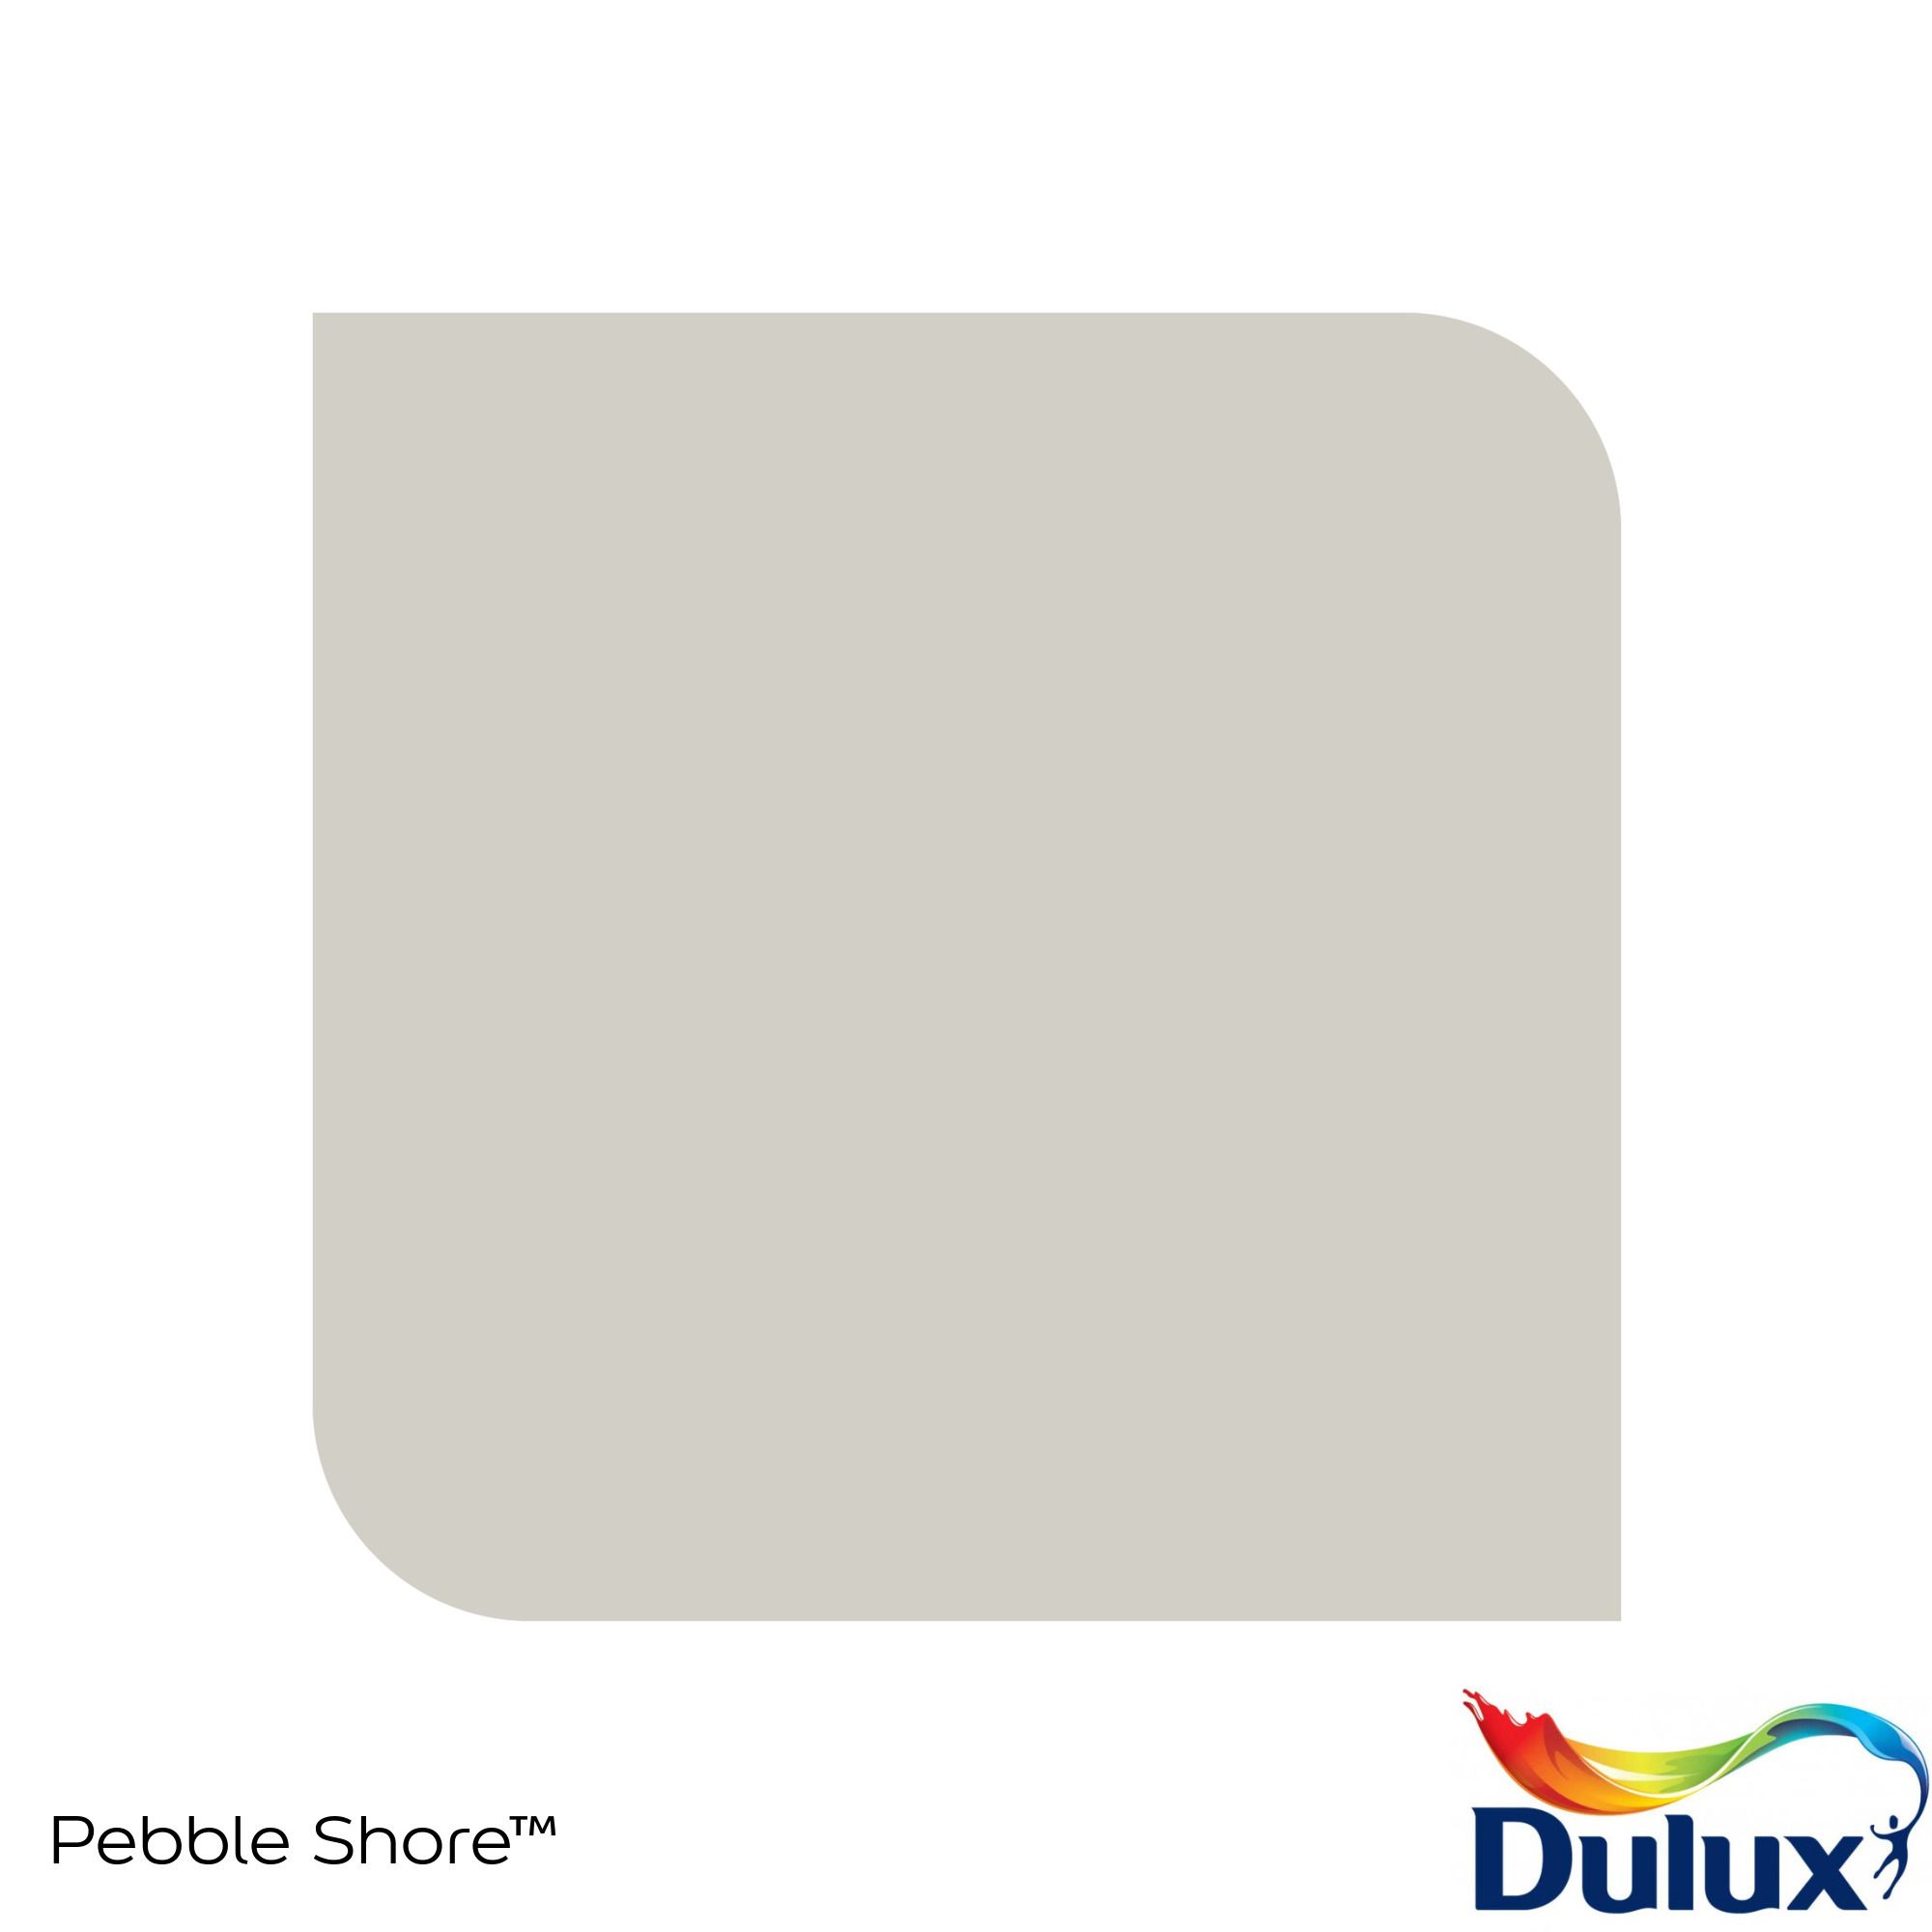 Dulux Standard Pebble shore Matt Emulsion paint, 30ml